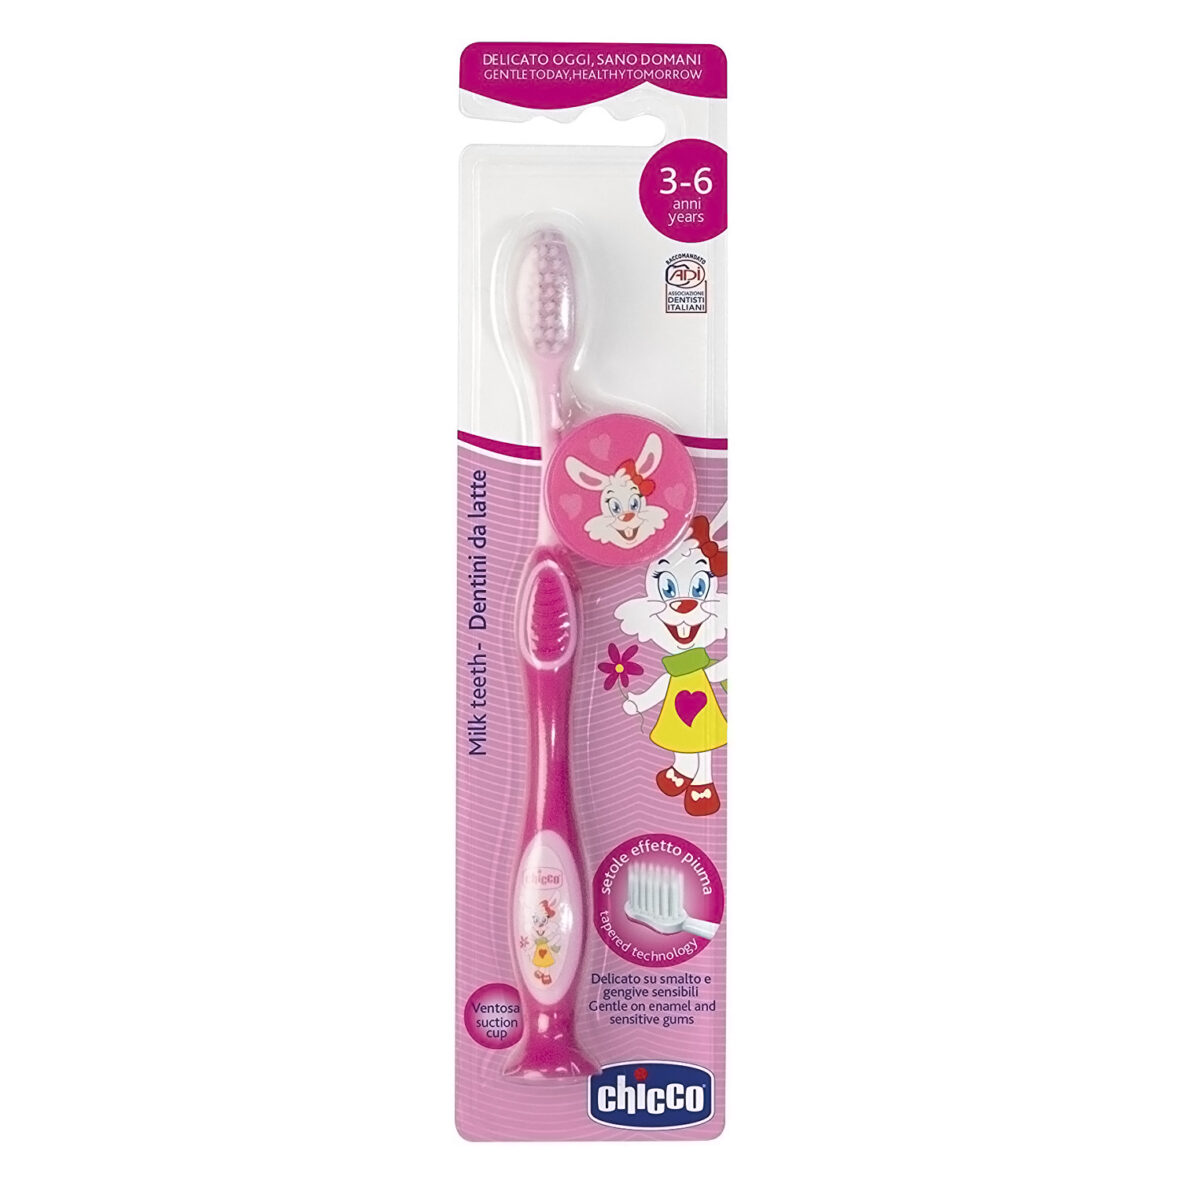 Chicco Milk Teeth Toothbrush, 3-6 Years, Pink, 1 pc